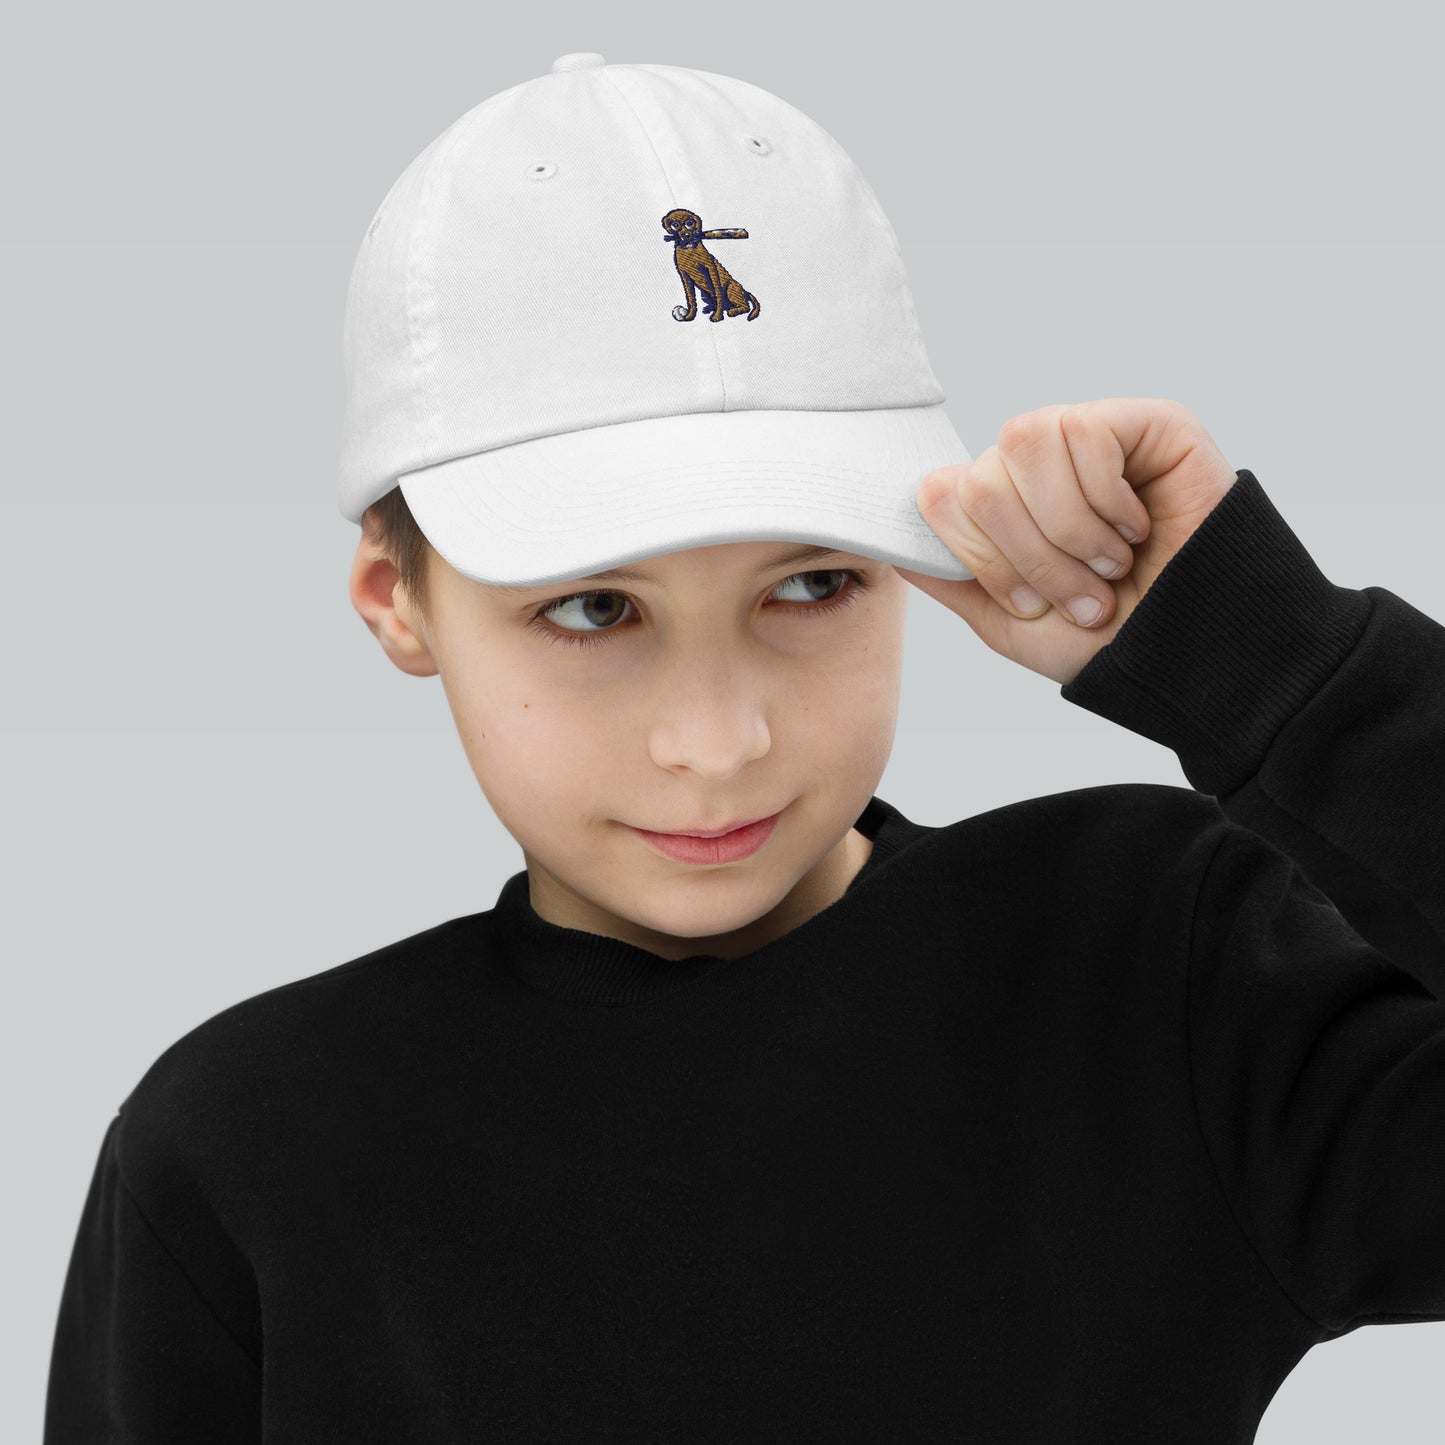 Baseball youth sports cap